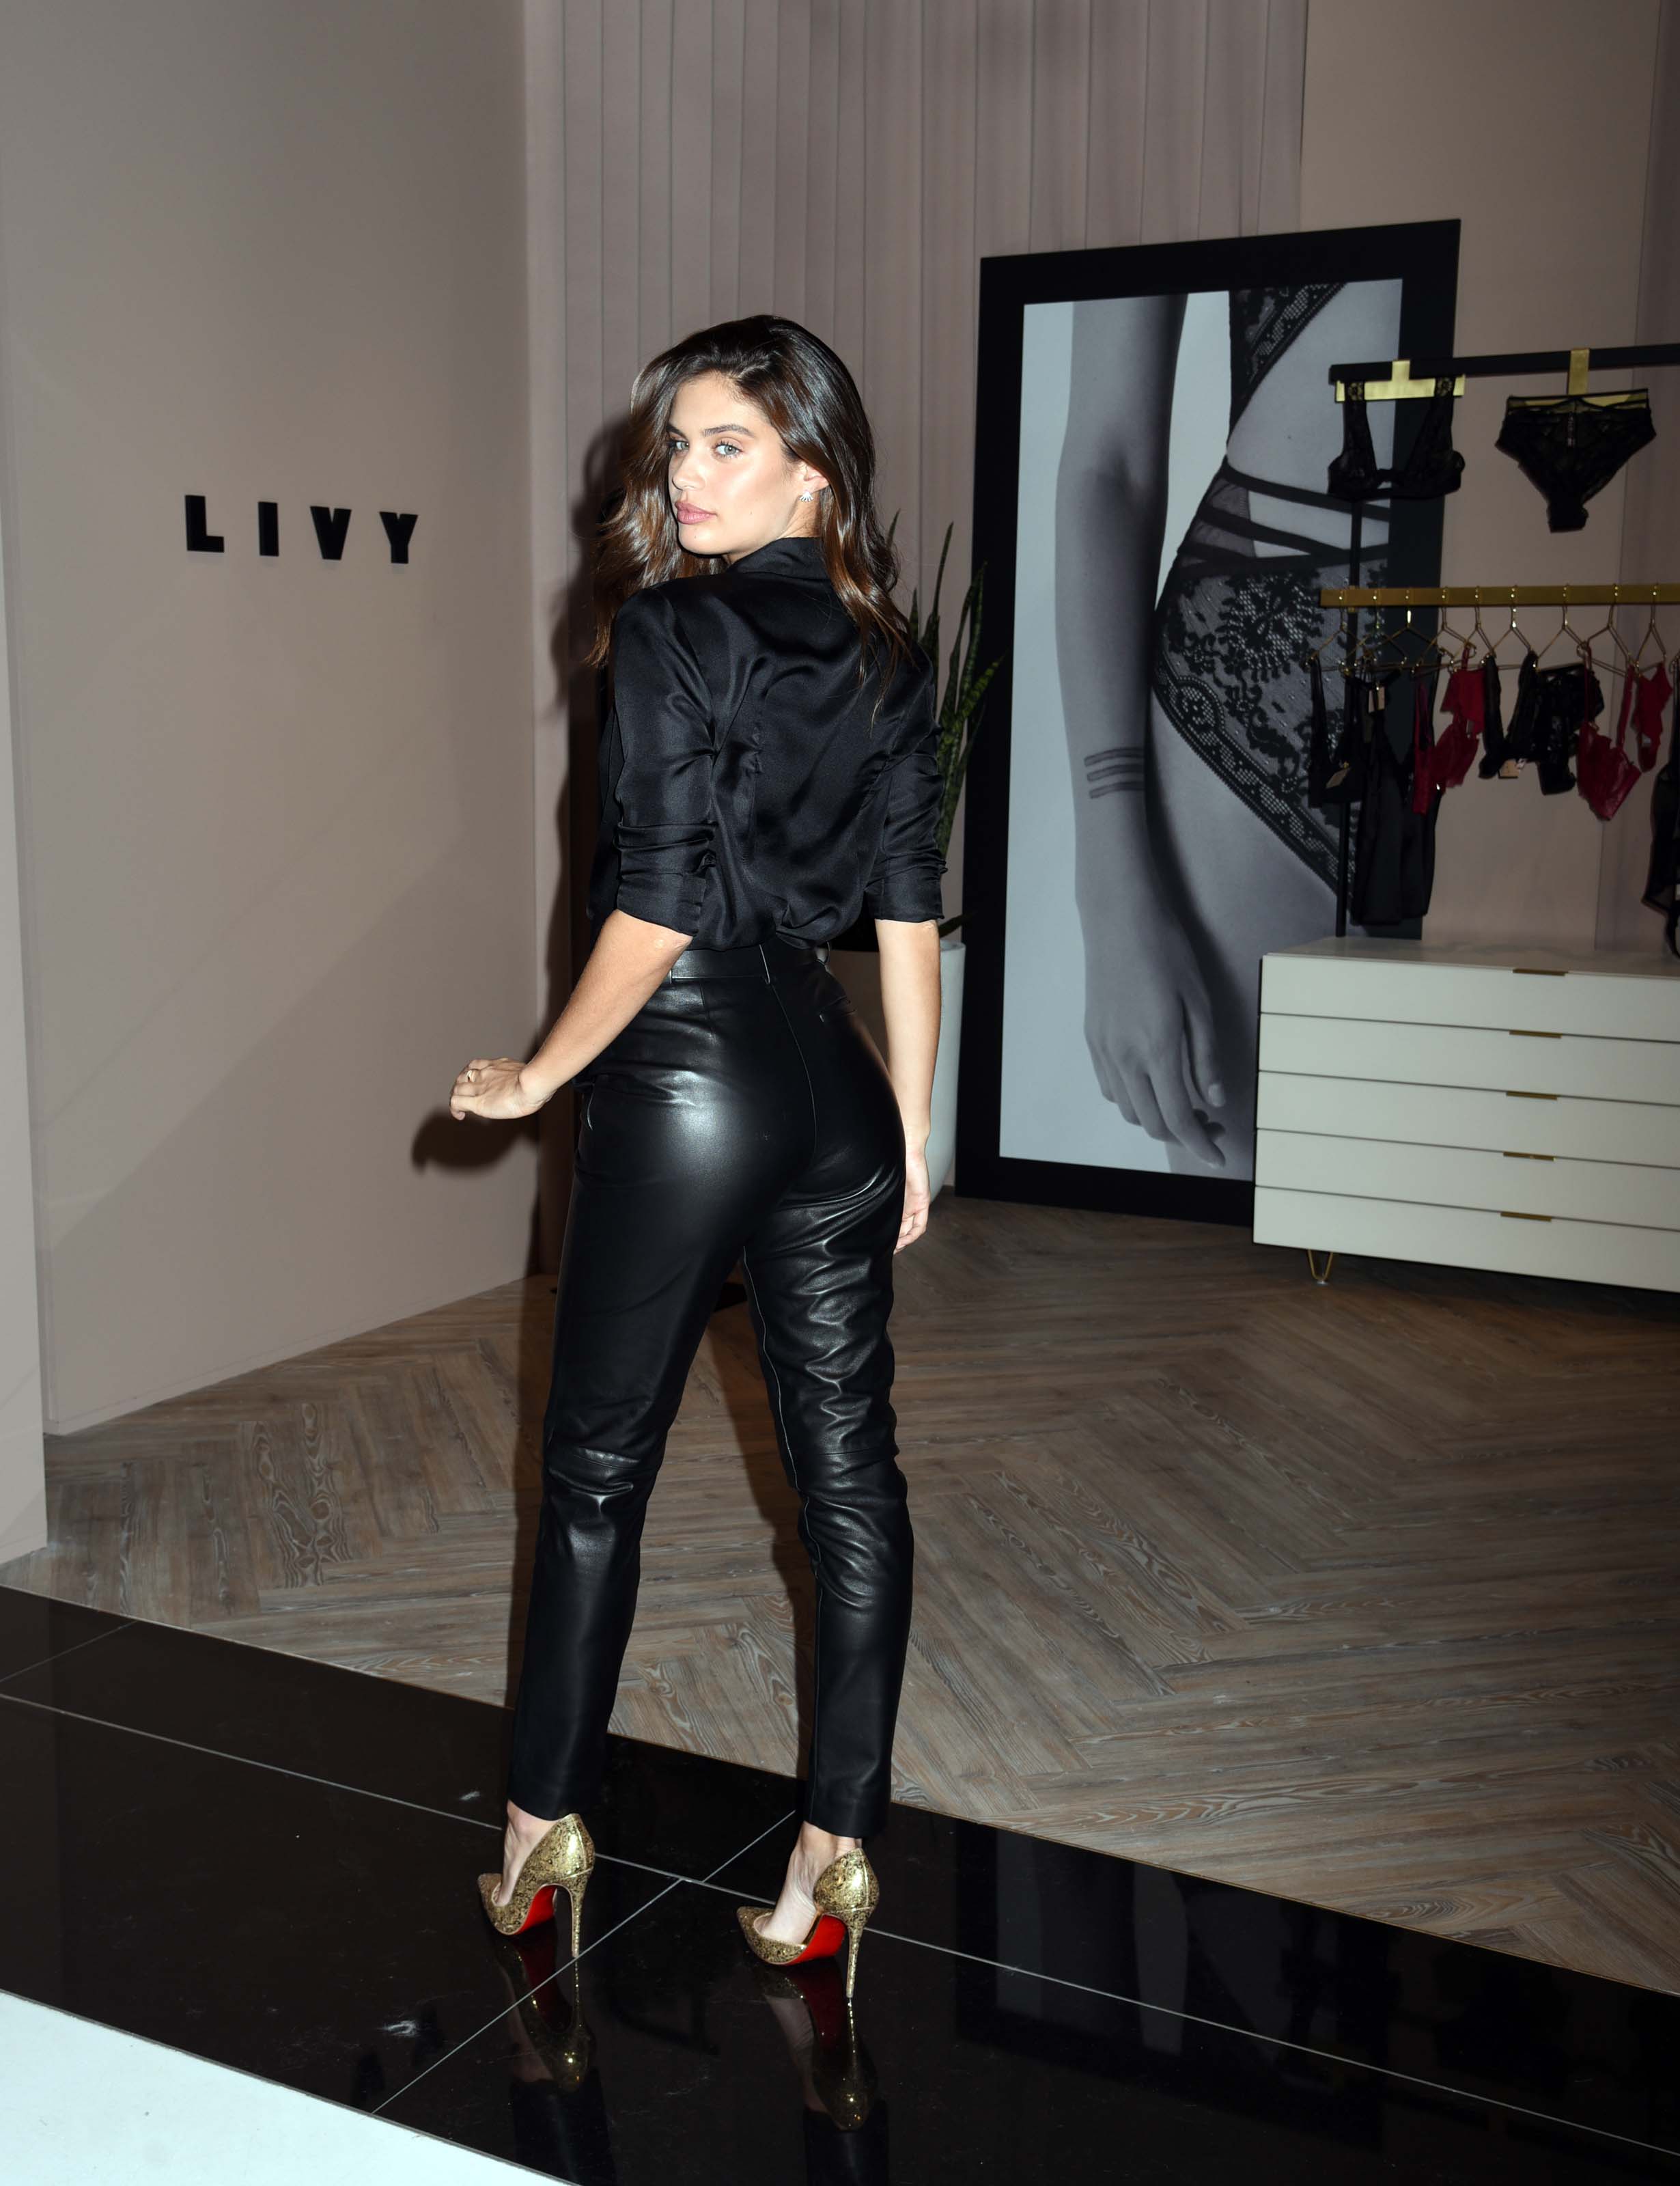 Sara Sampaio attends LIVY lingerie celebration at Victoria’s Secret